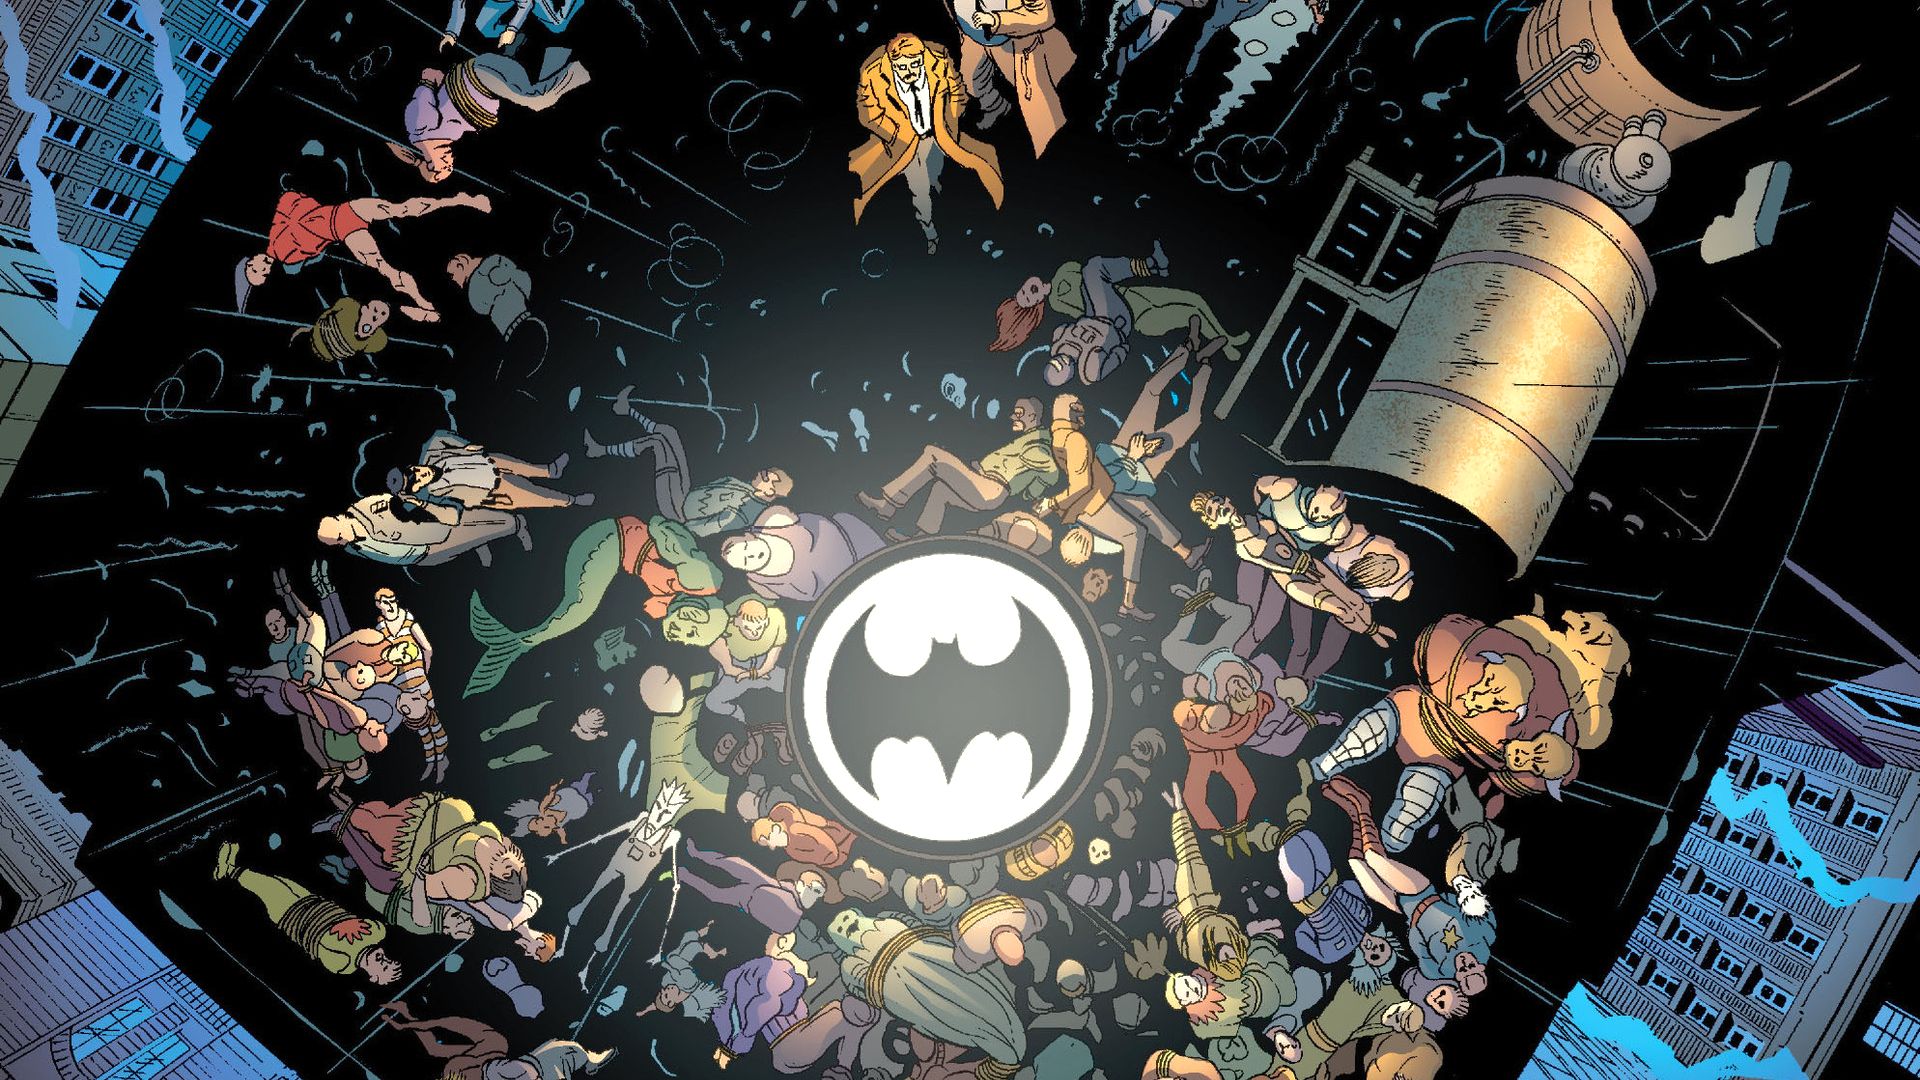 Скачать обои бесплатно Комиксы, Бэтмен, Бэтмен И Робин картинка на рабочий стол ПК